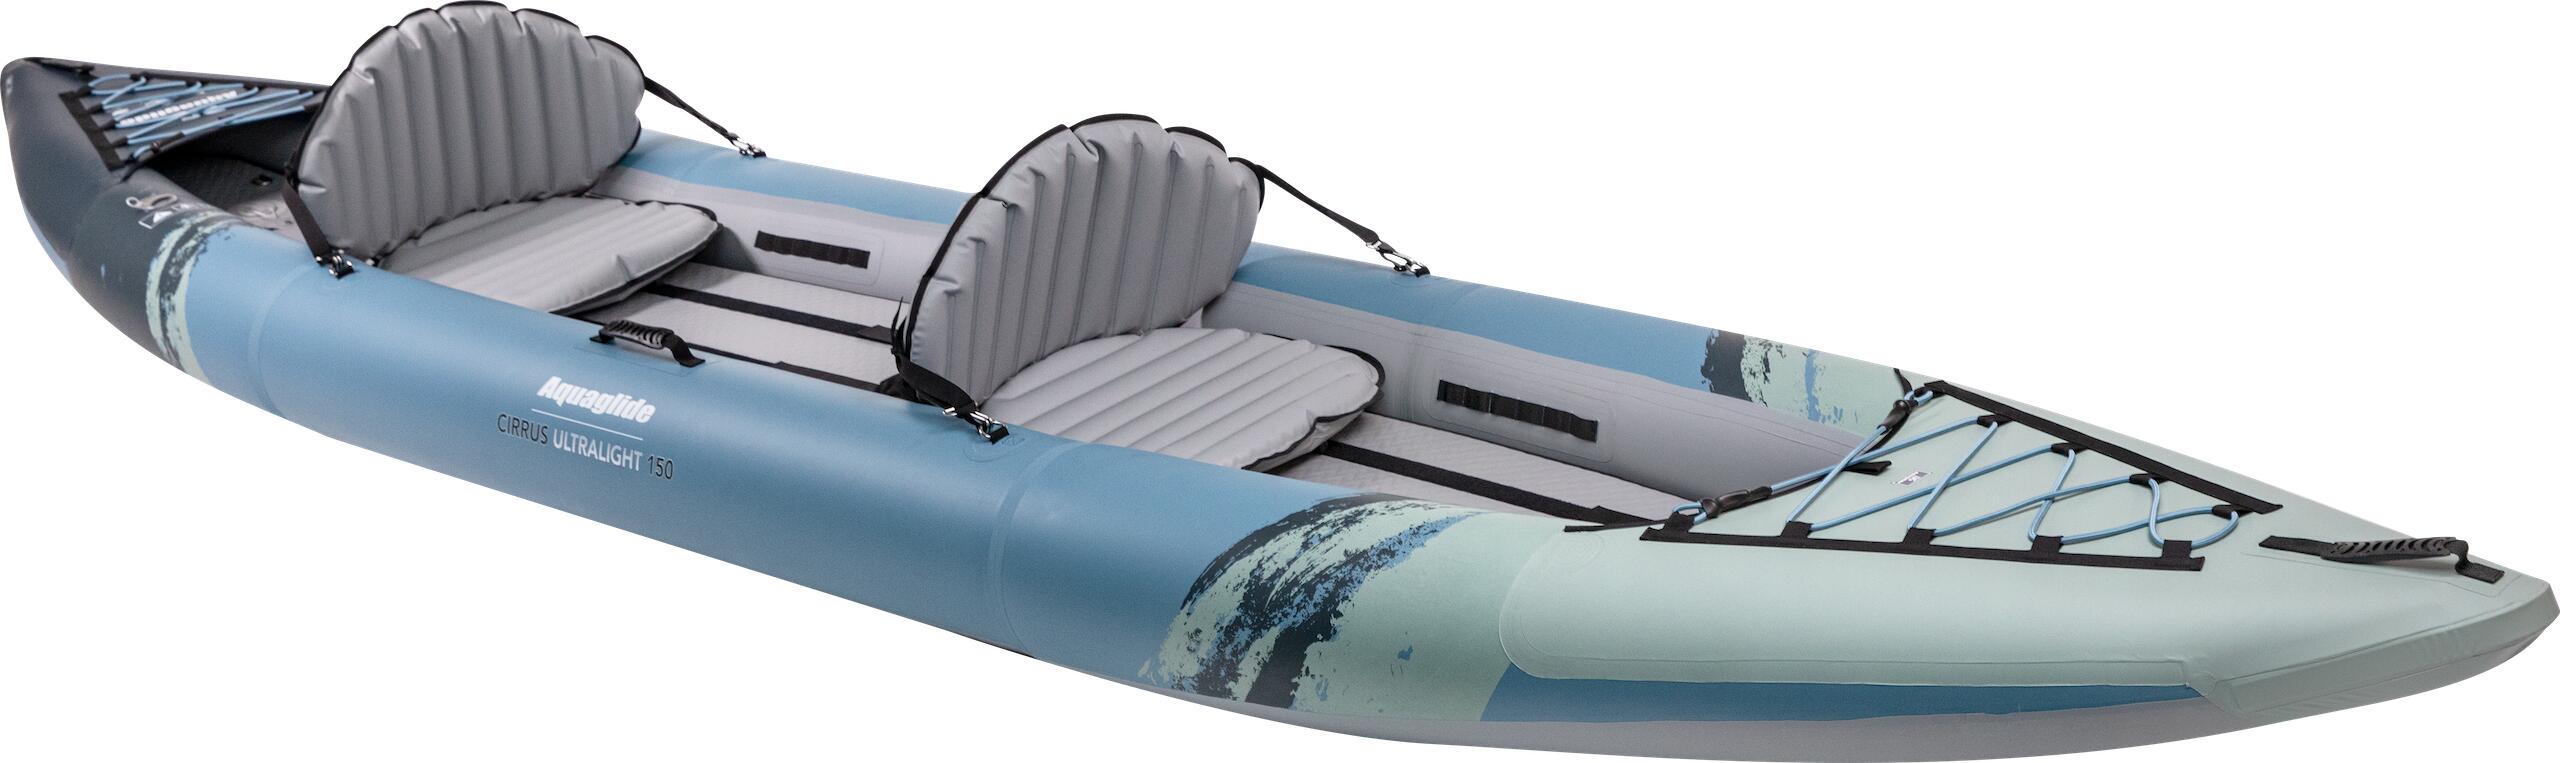 Cirrus 150 - Ultralight Inflatable Touring Kayak 3/6